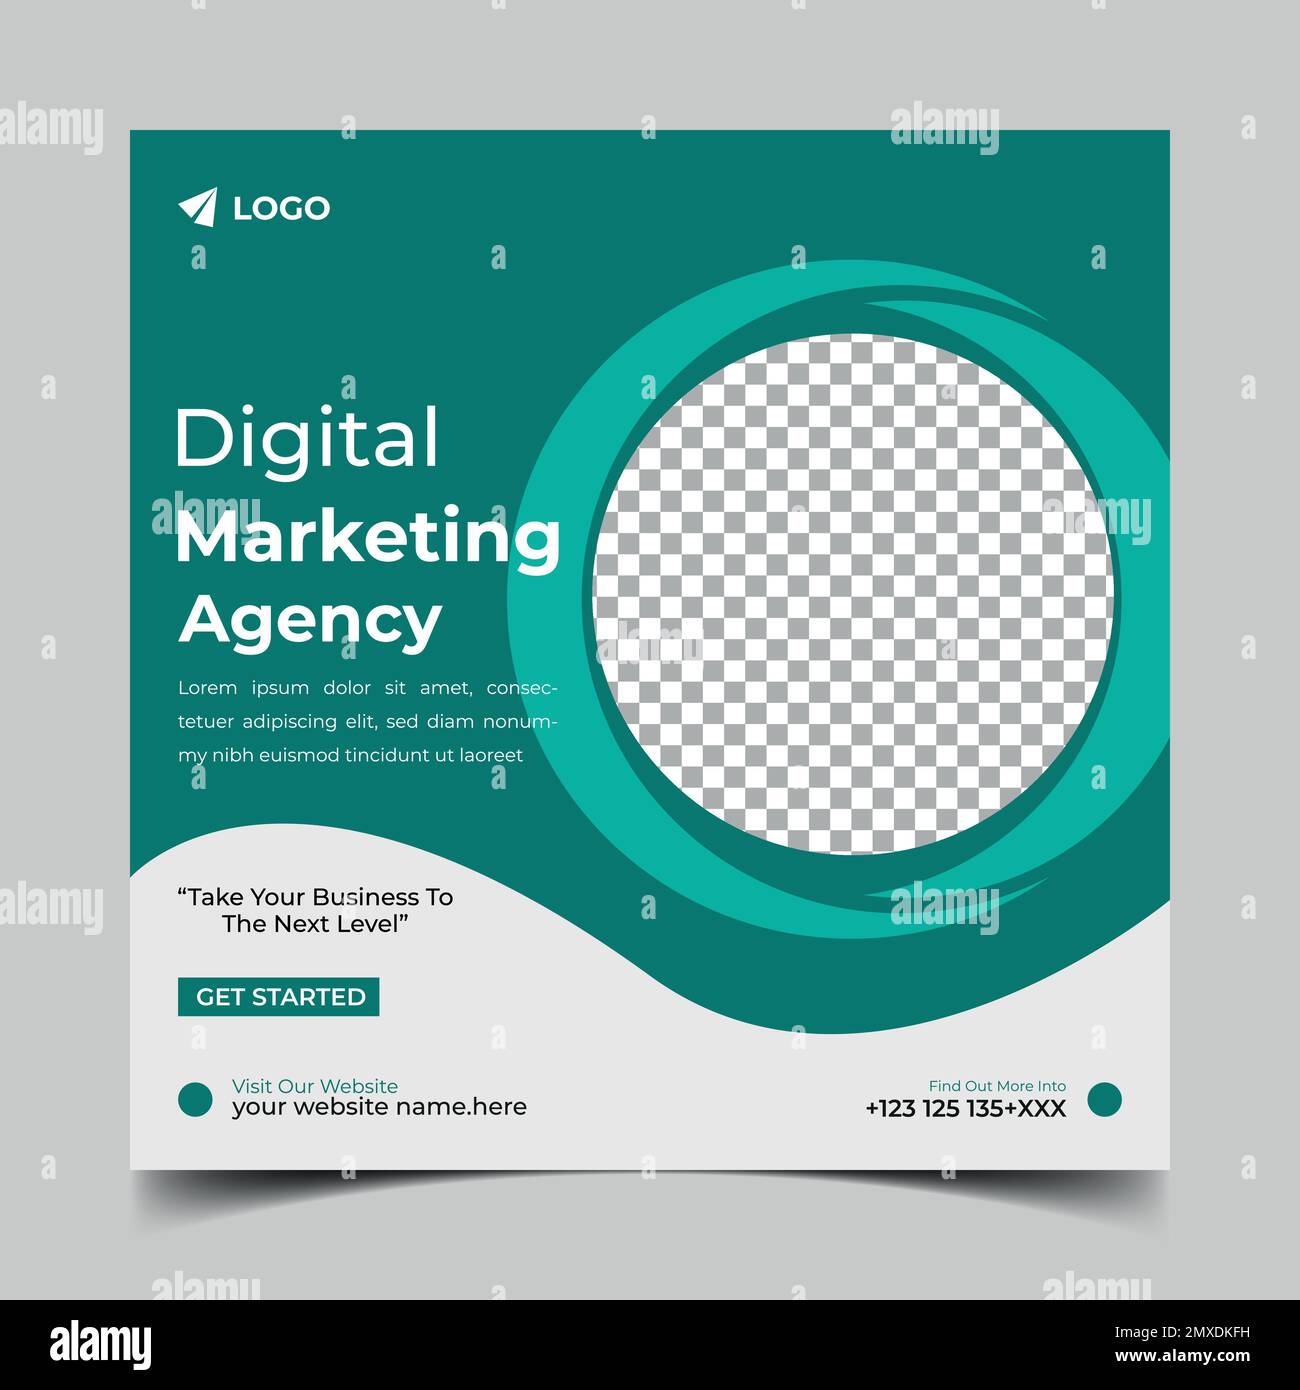 Digital marketing agency social media post design and web banner template Stock Vector